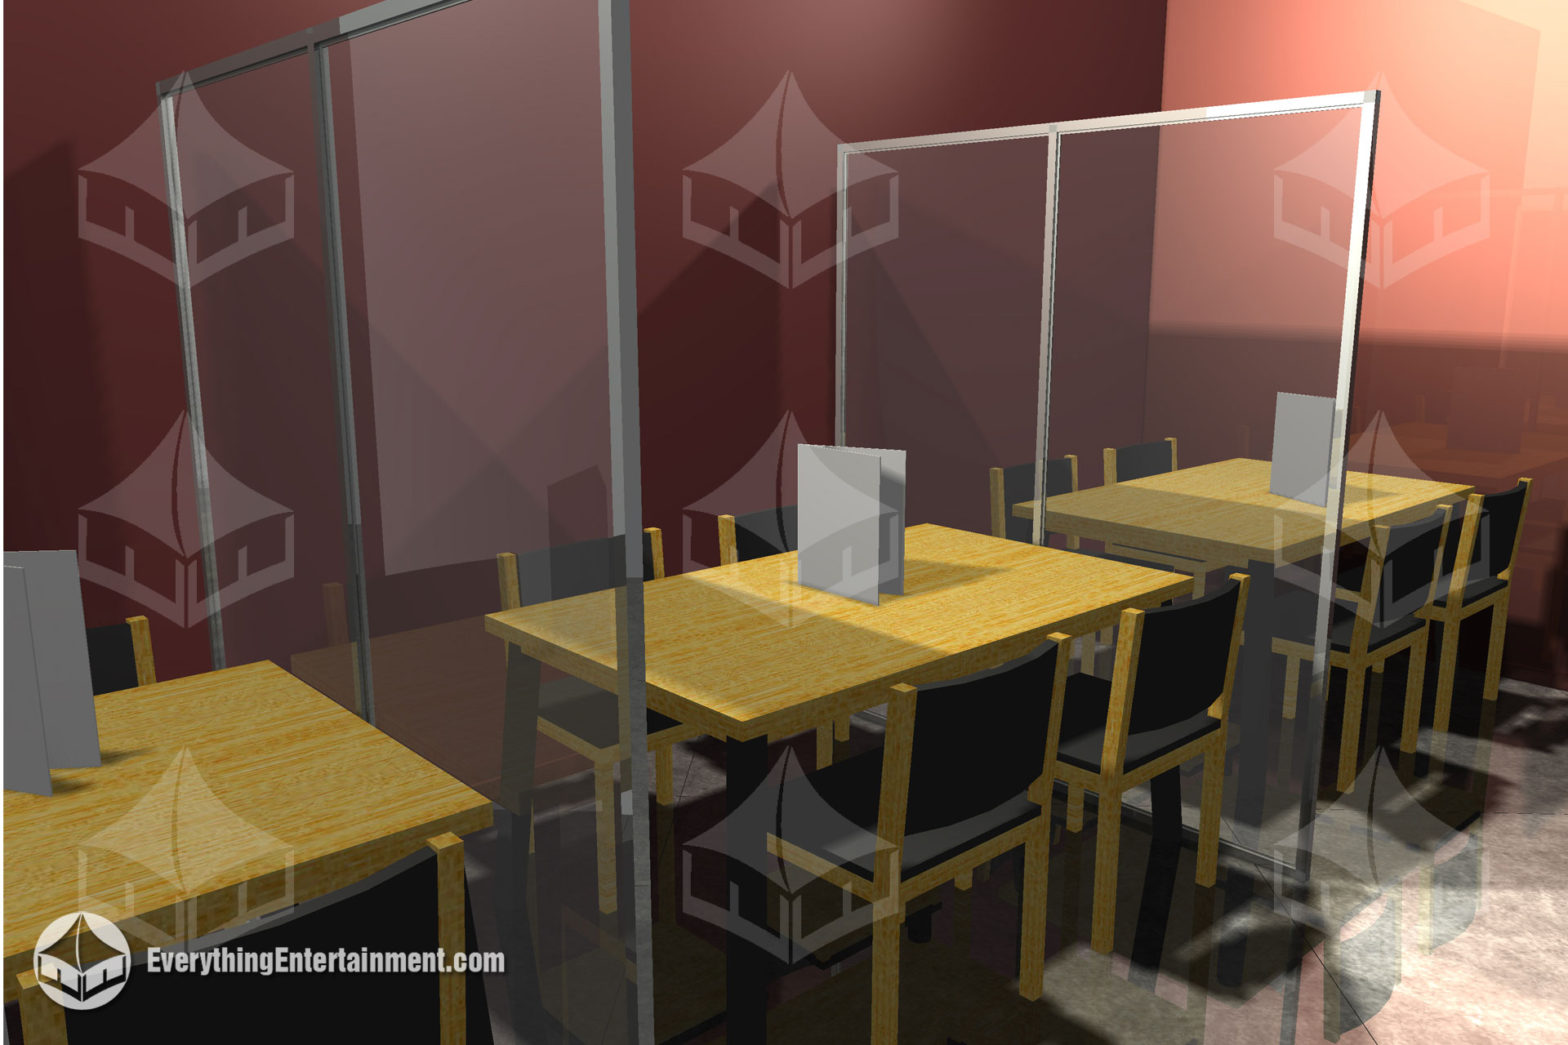 clear dividing walls between tables at restaurant